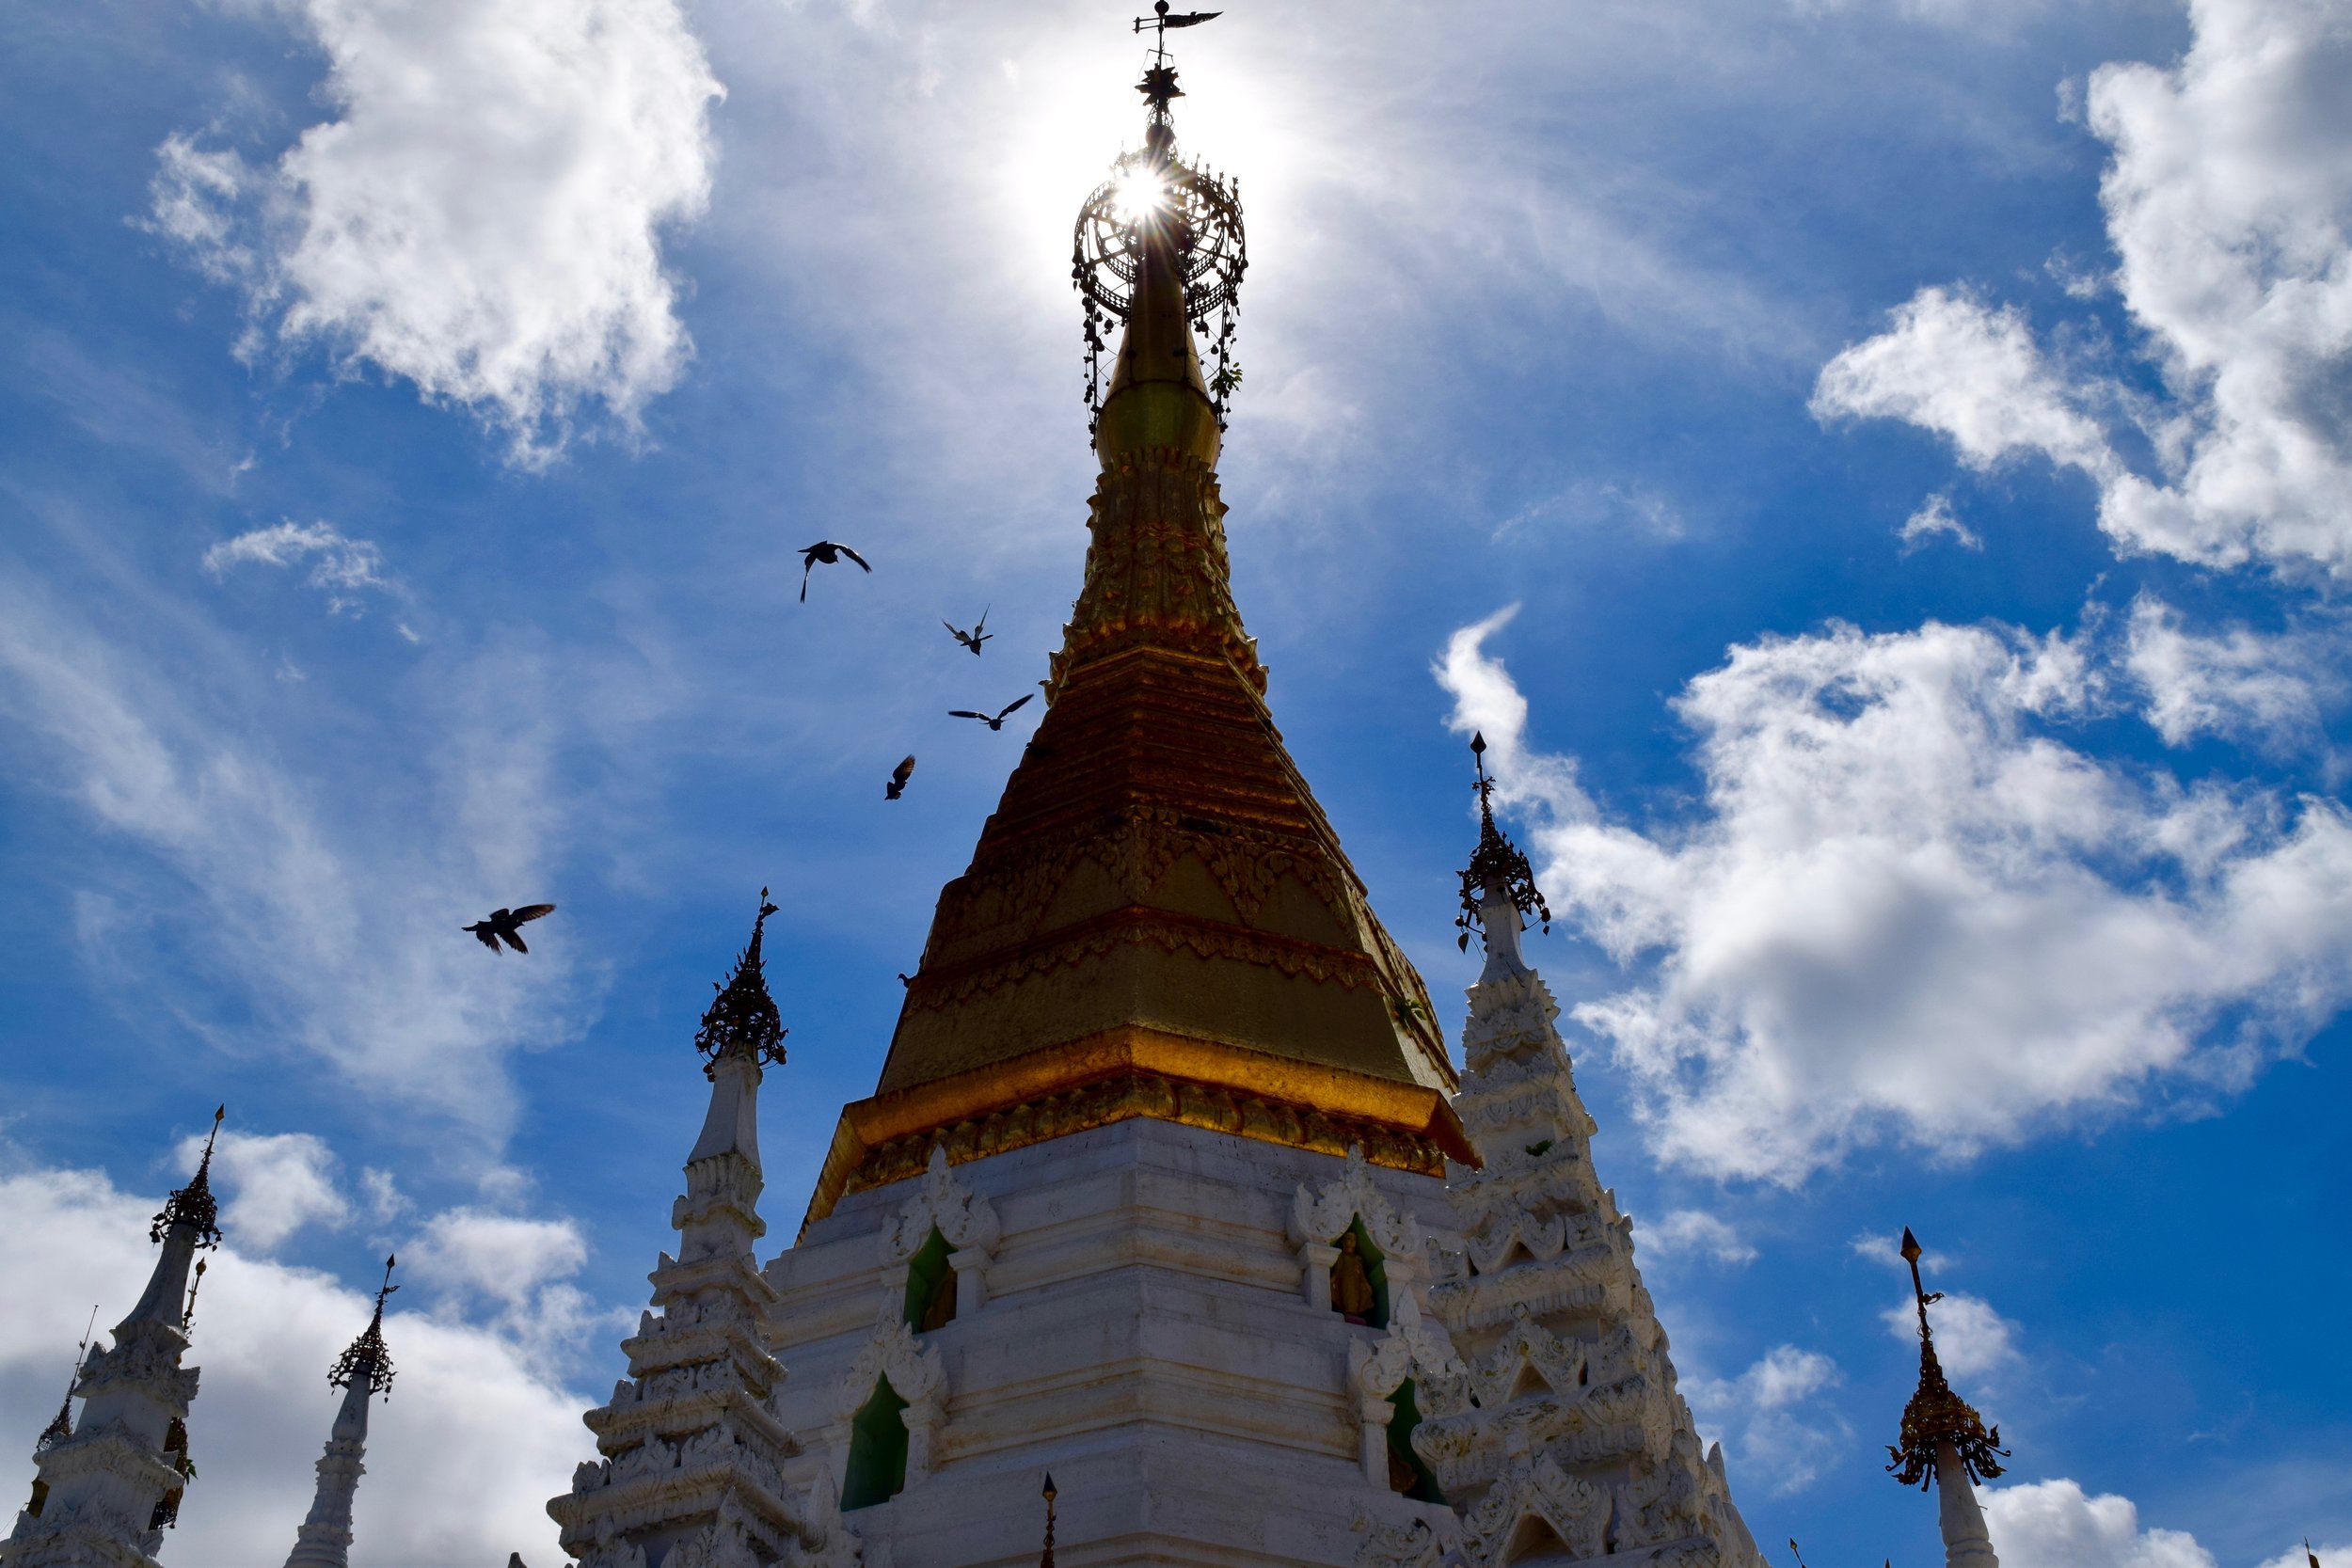  Shwedagon Pagoda in Yangon, Myanmar. October 2015. 